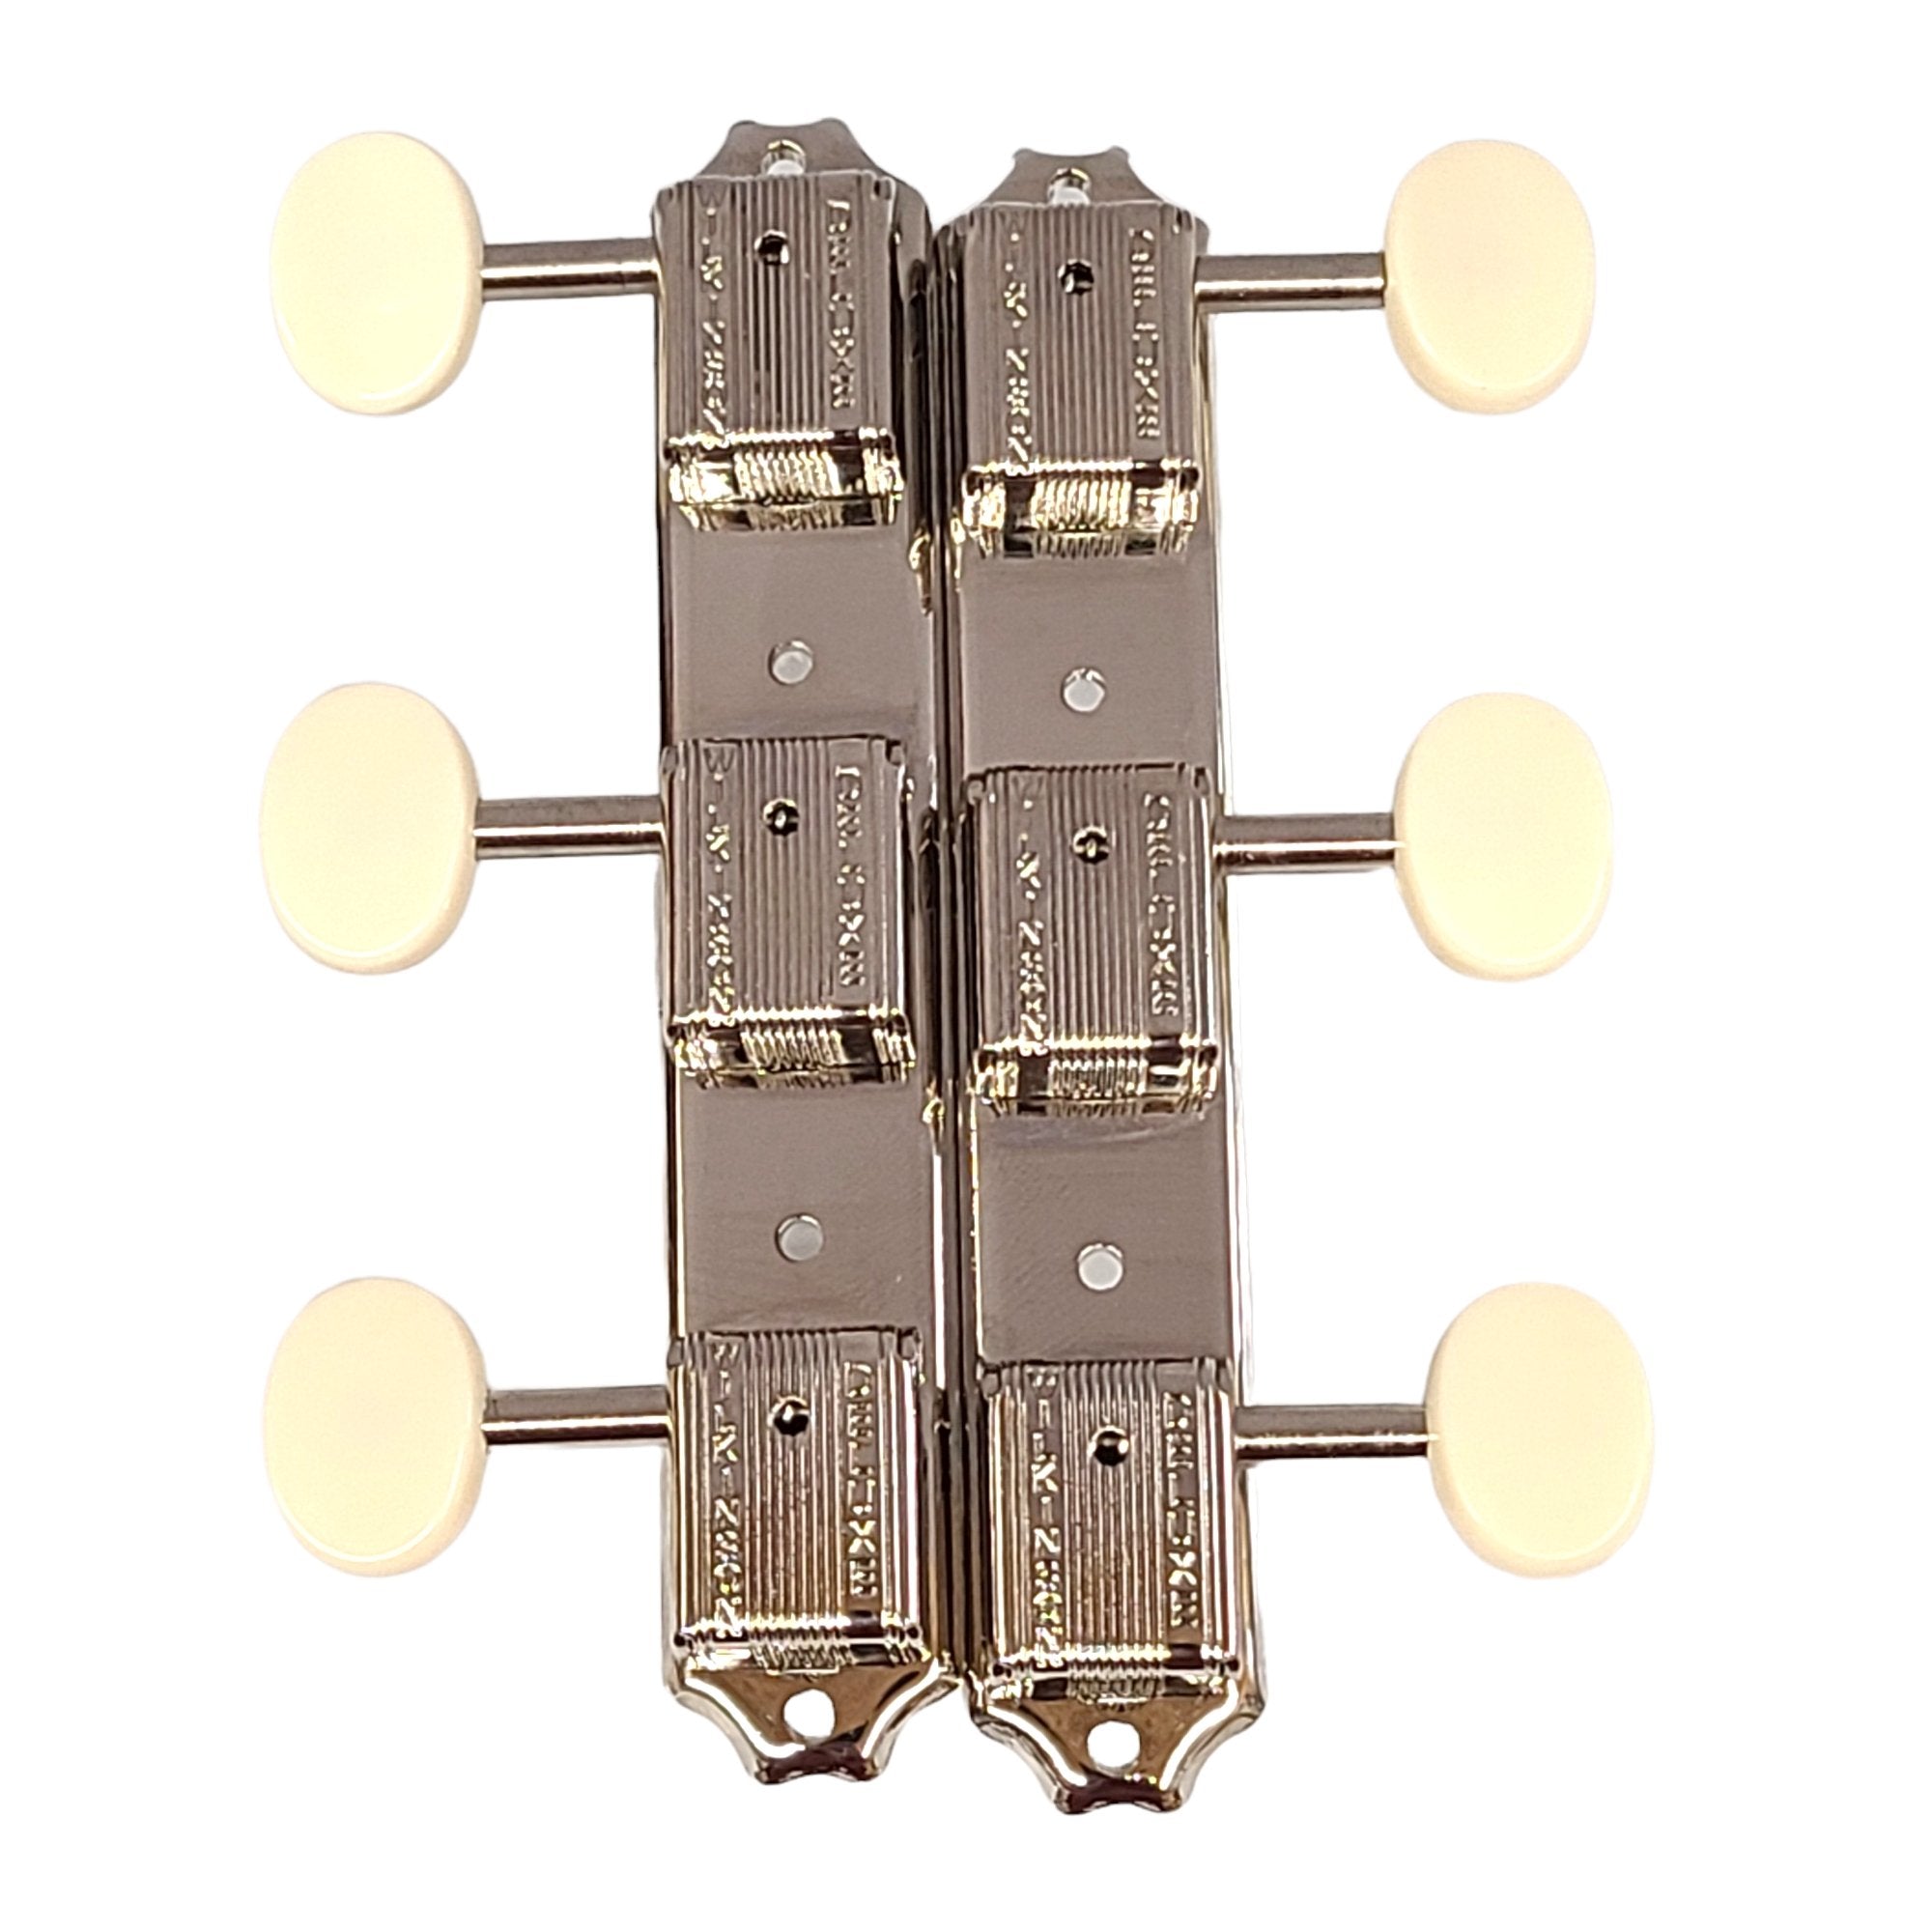 Wilkinson 3x3 Plate Guitar Tuning Pegs, Nickel With Cream